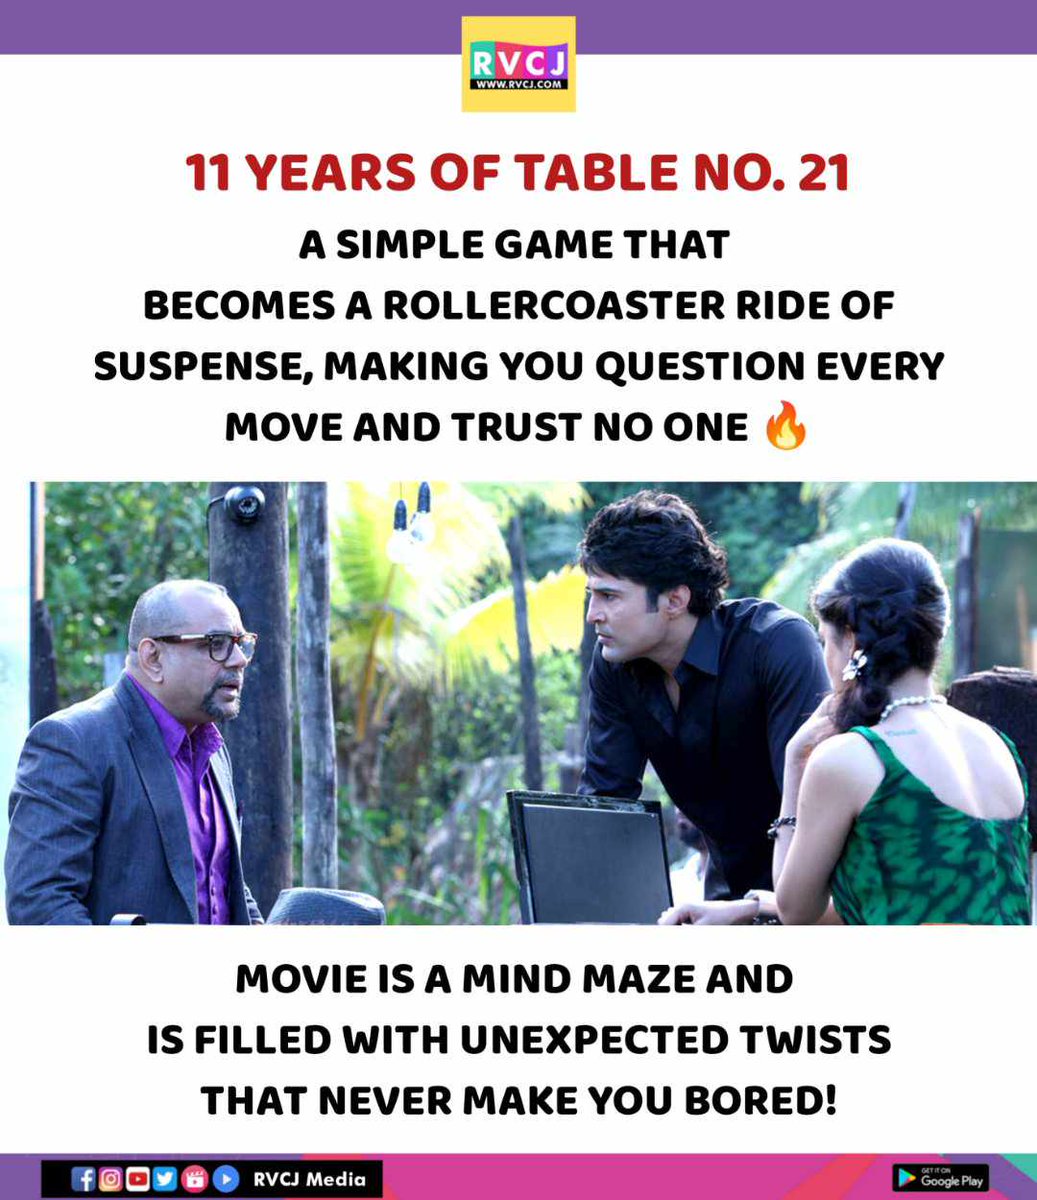 11 years of Table No. 21

#tableno21 #pareshrawal #rajeevkhandelwal #tinadesai #adityadatt #rvcjmovies #rvcjinsta @SirPareshRawal